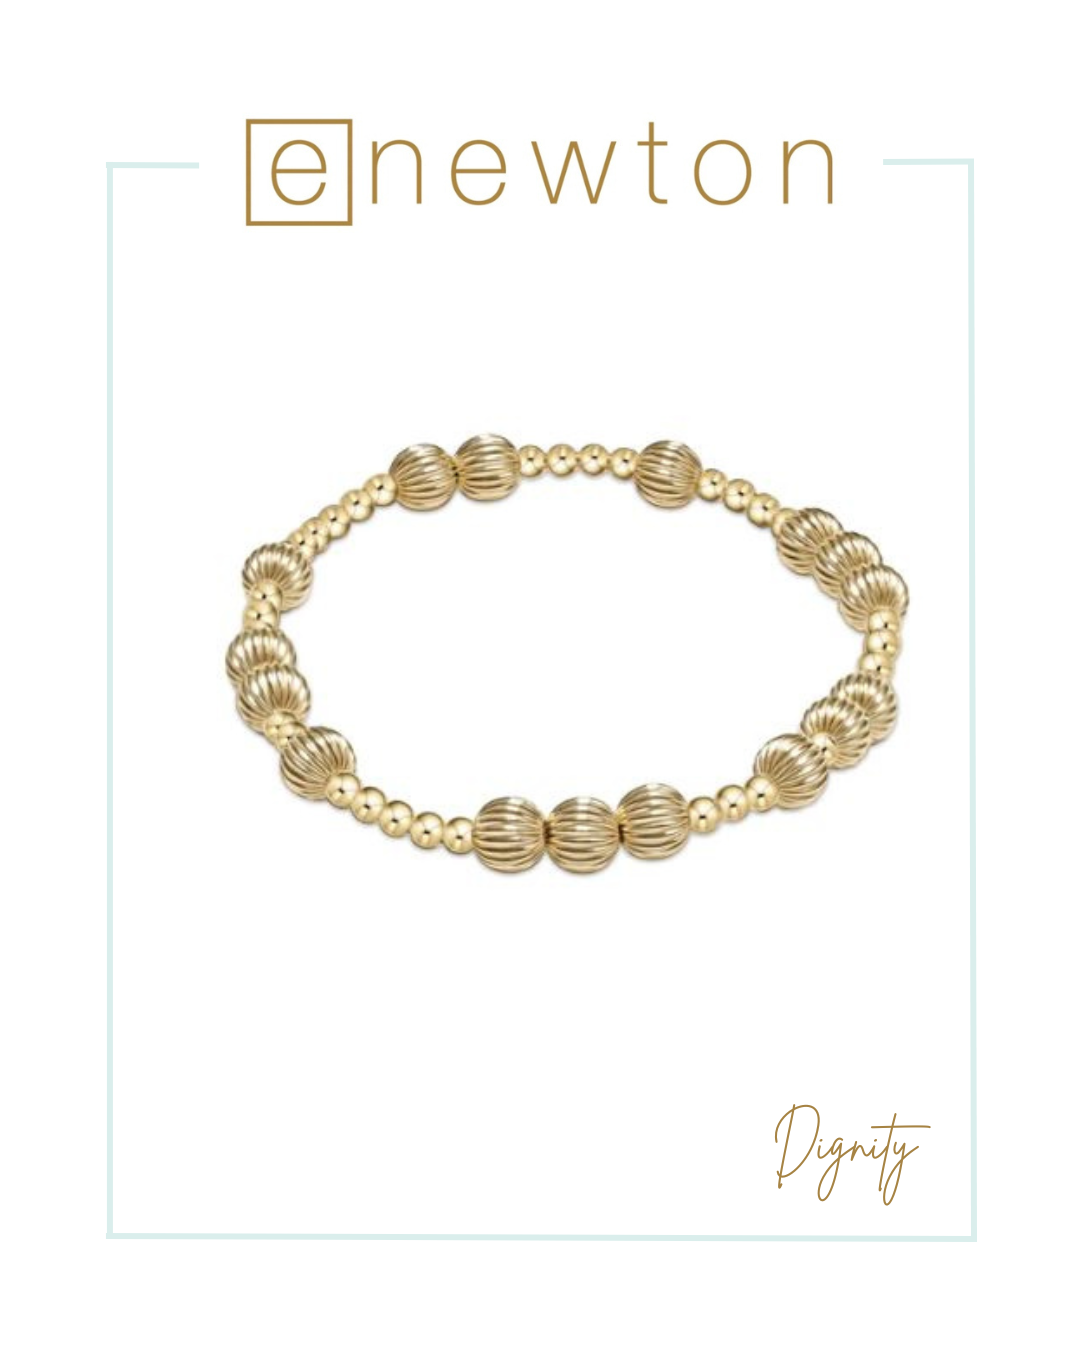 E Newton Hope Unwritten Dignity 6mm Bead Bracelet - Gold-Bracelets-ENEWTON-The Village Shoppe, Women’s Fashion Boutique, Shop Online and In Store - Located in Muscle Shoals, AL.